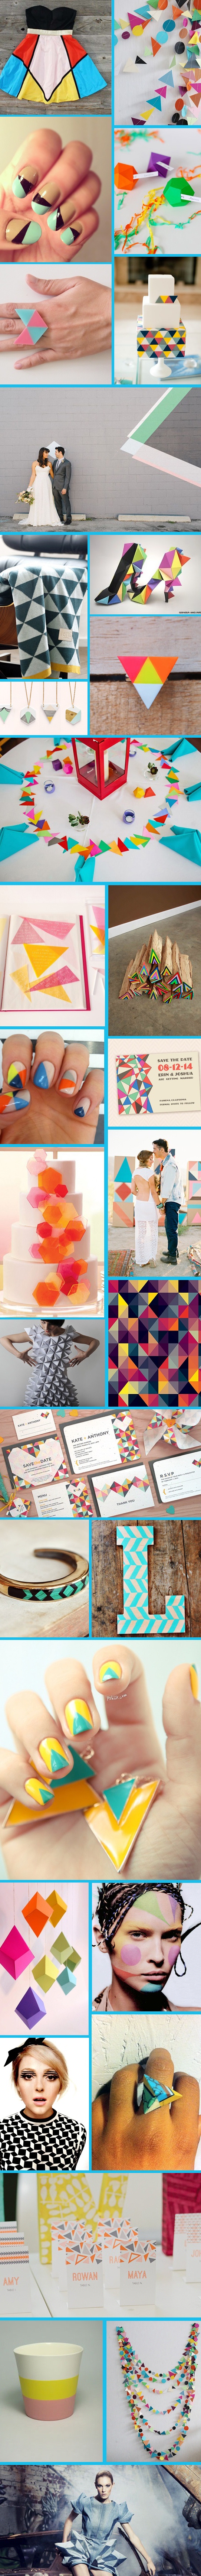 Geometric Shapes Wedding Ideas